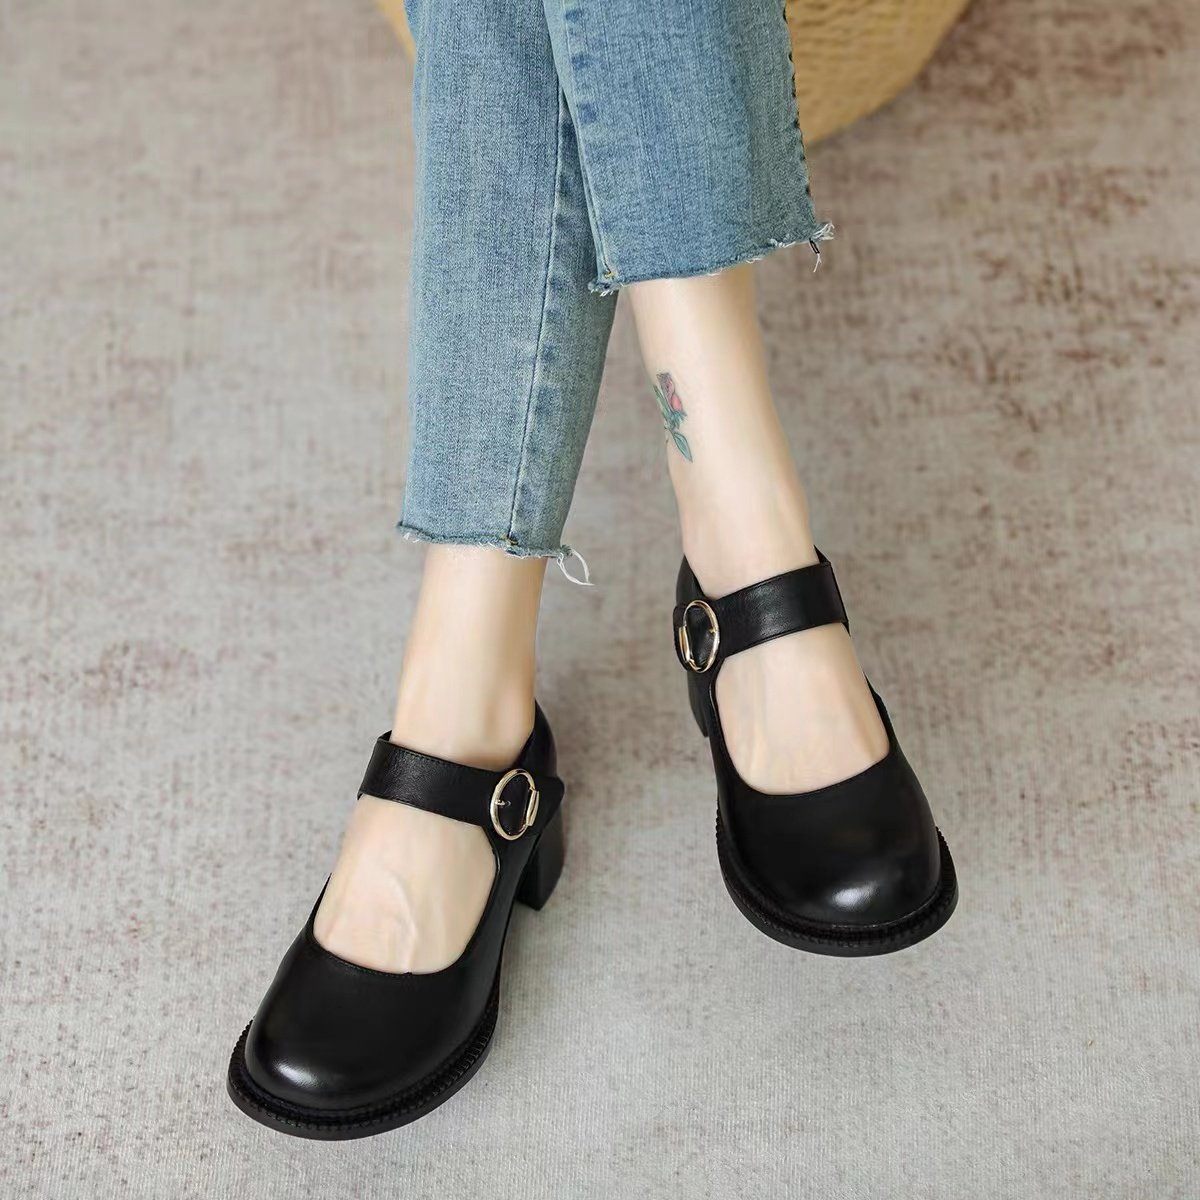 Handmade Leather Pumps Mary Jane Heels Sandals Womens Round Toe Retro ...